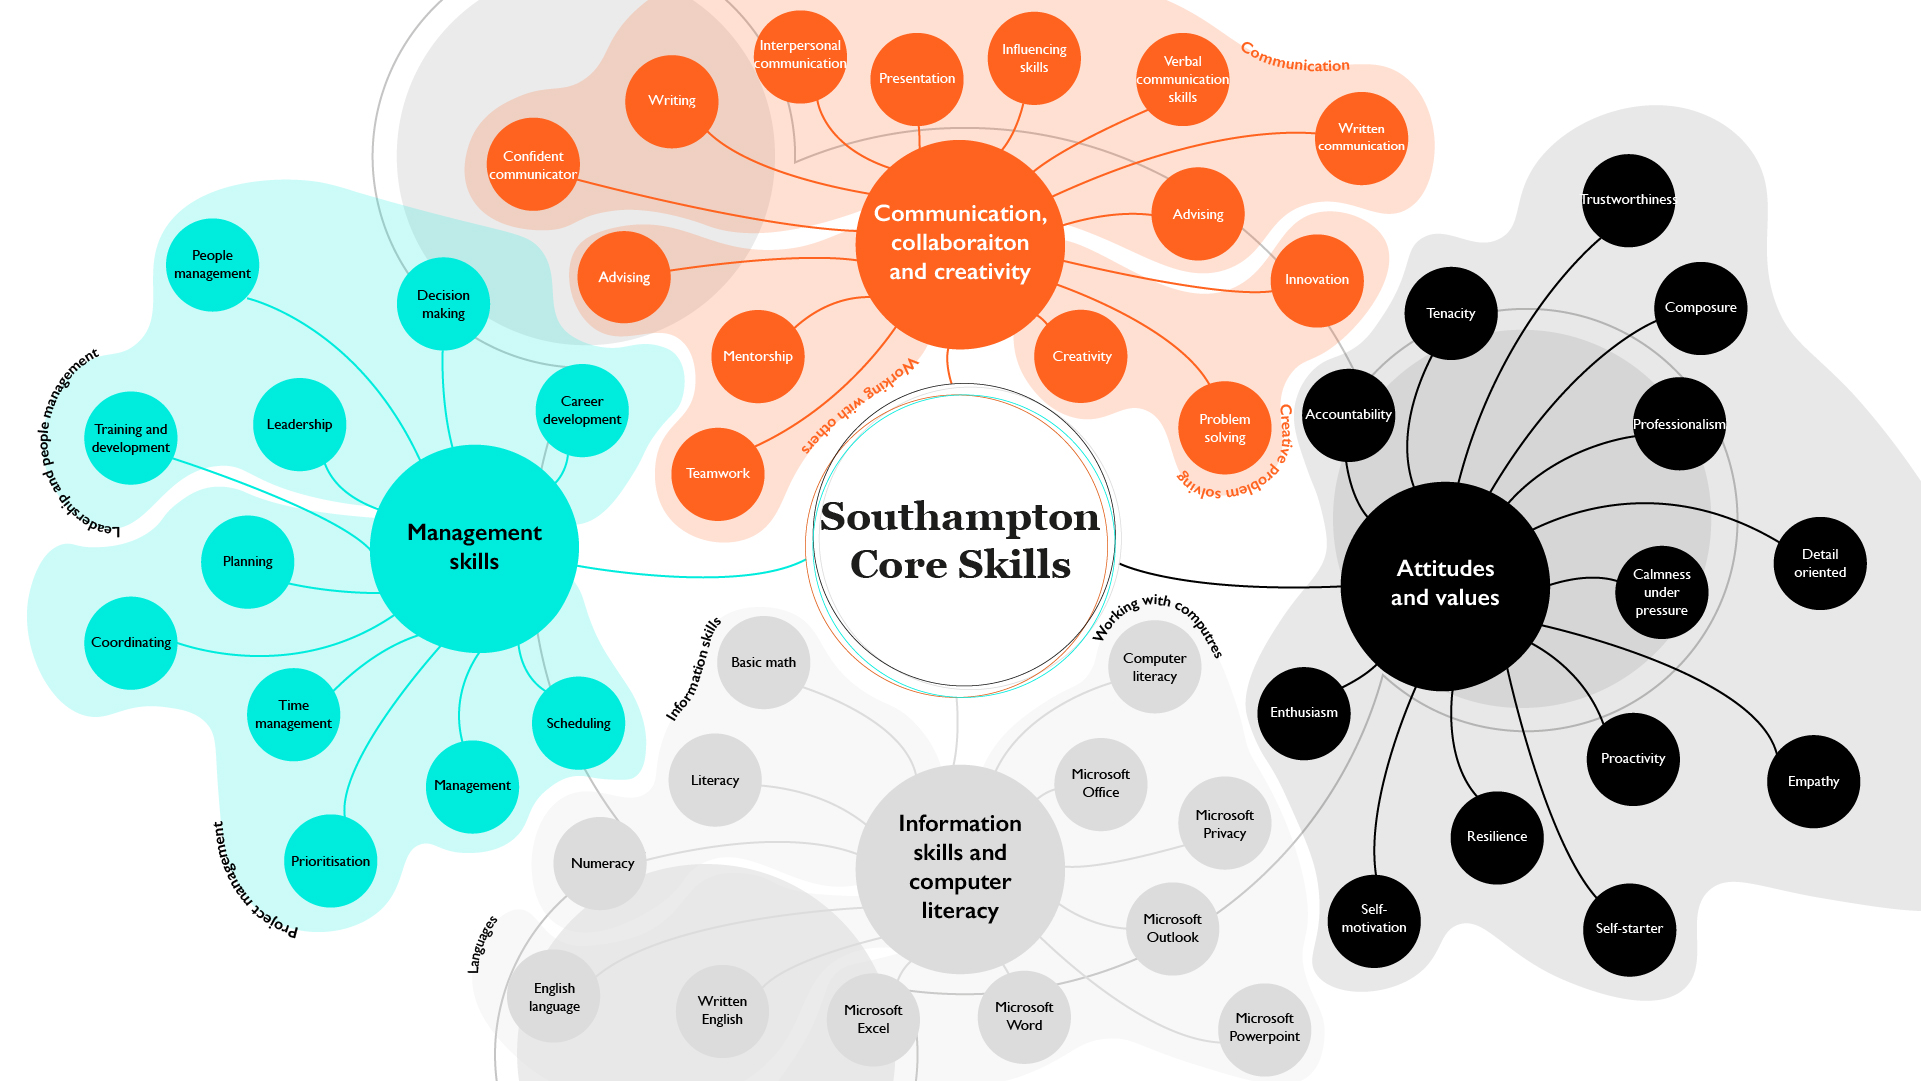 Southampton core skills framework (RSA analysis of Emsi Burning Glass job posting analytics)